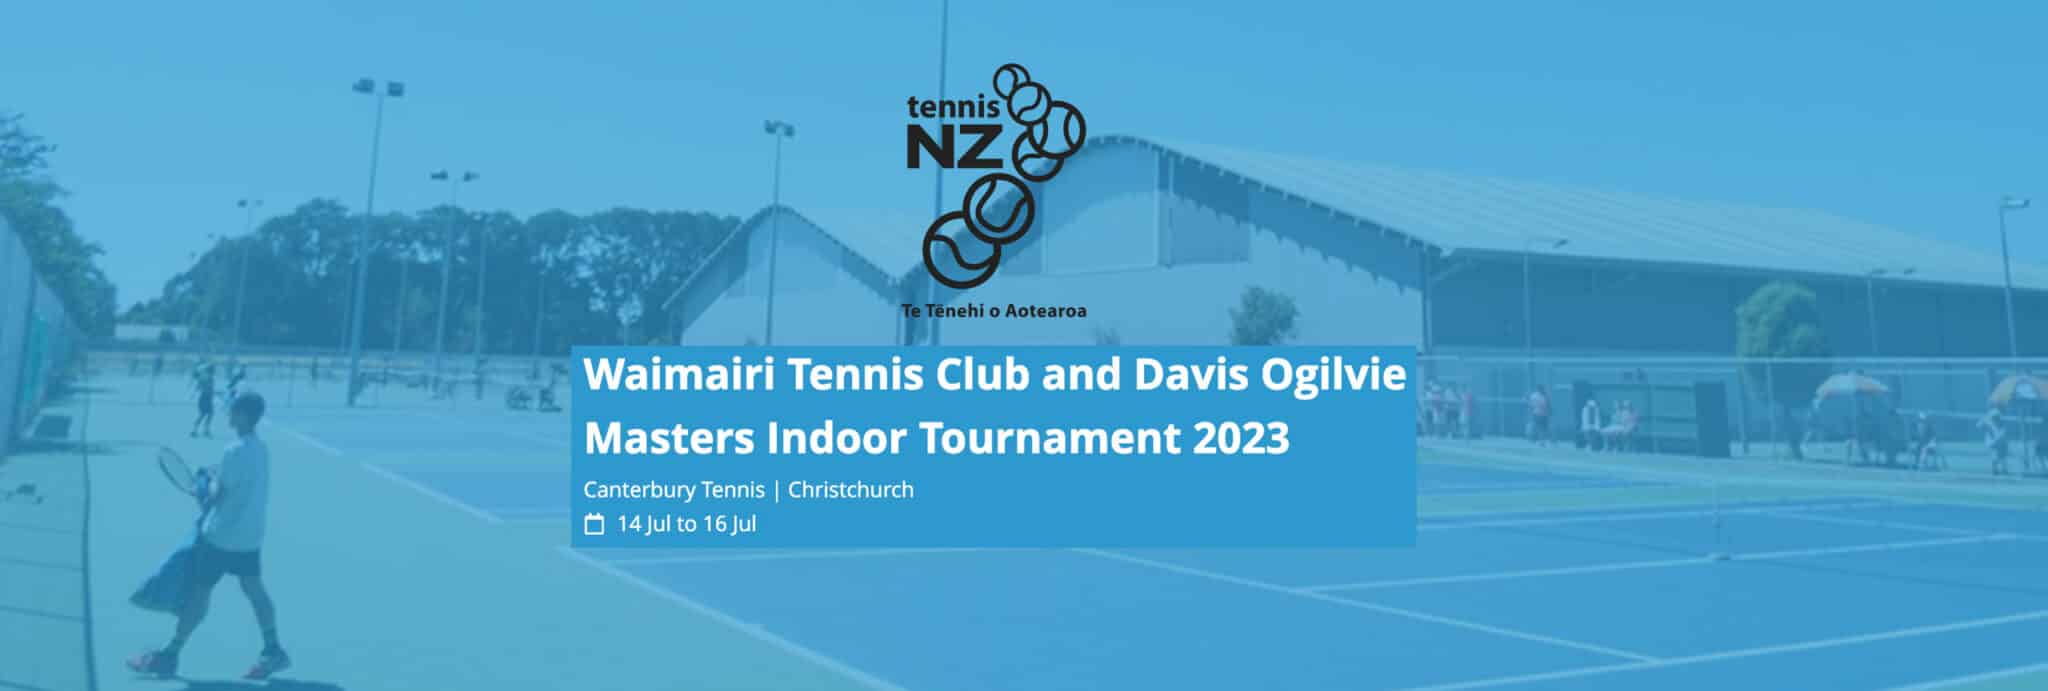 Waimairi Tennis Club and Davis Ogilvie Masters Indoor Tournament 2023